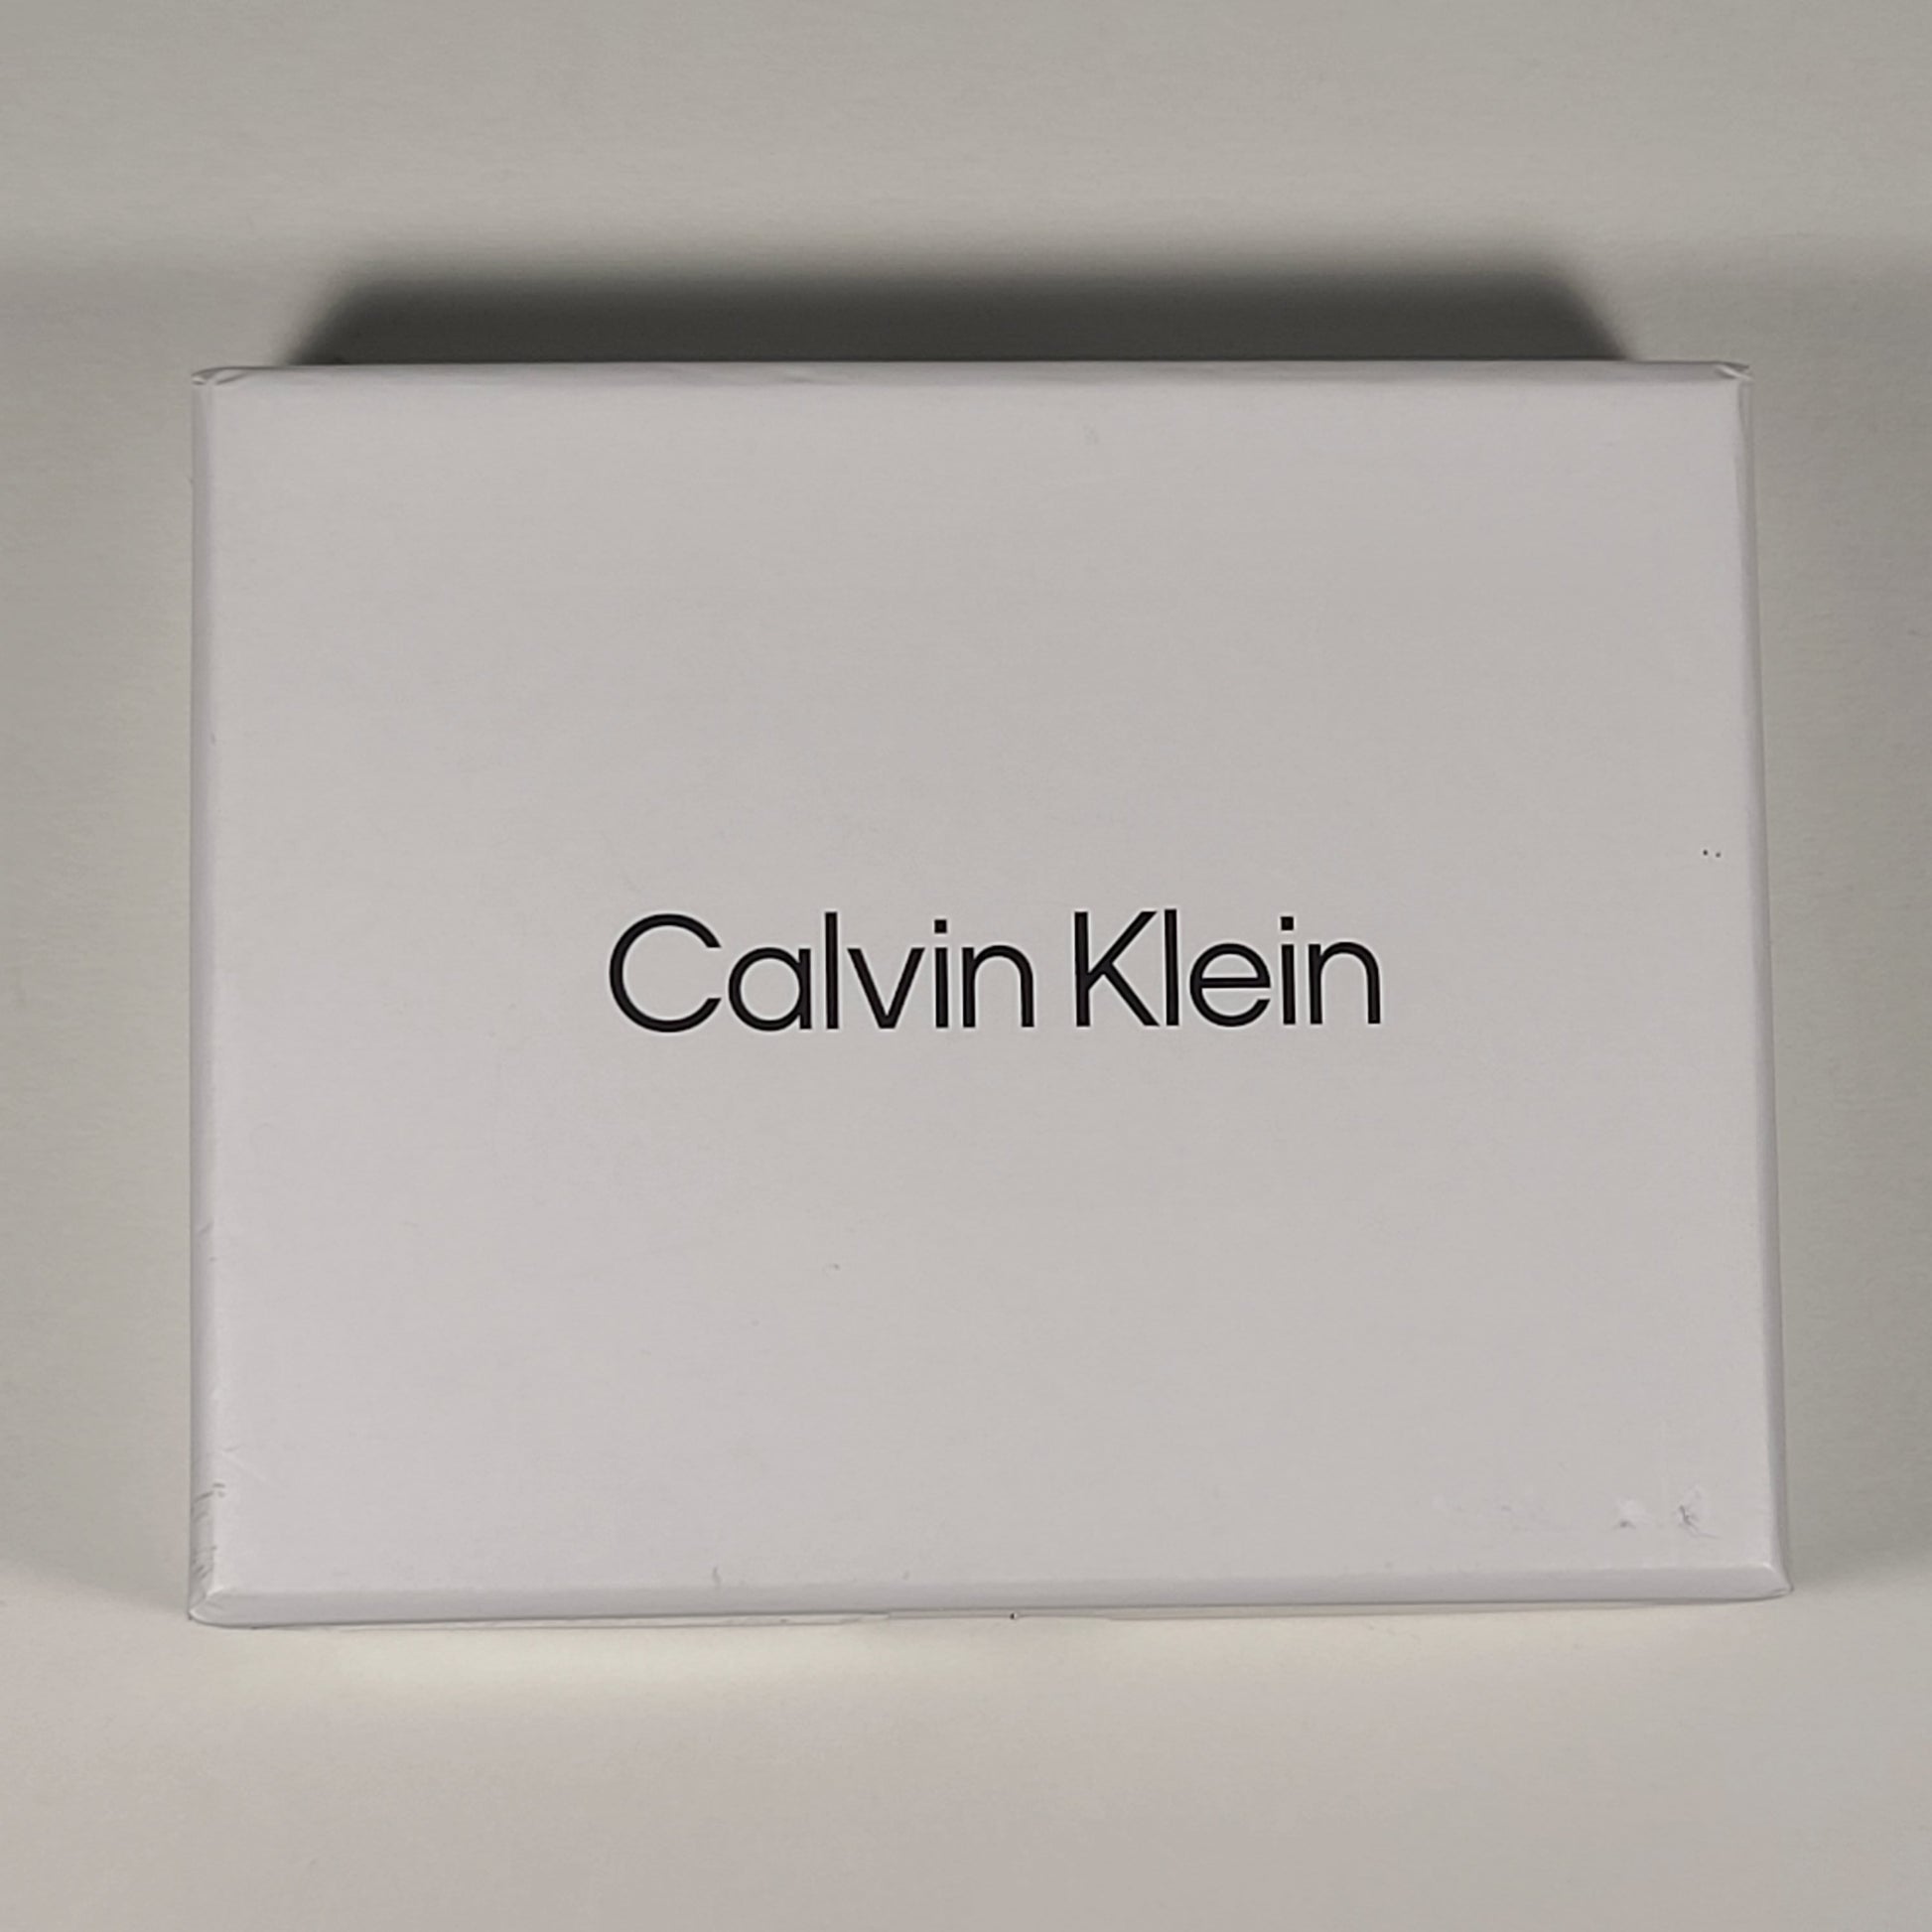 Calvin Klein Men’s Bifold Blue / Navy Leather RFID Wallet Passcase 31KA220032 - Wallets